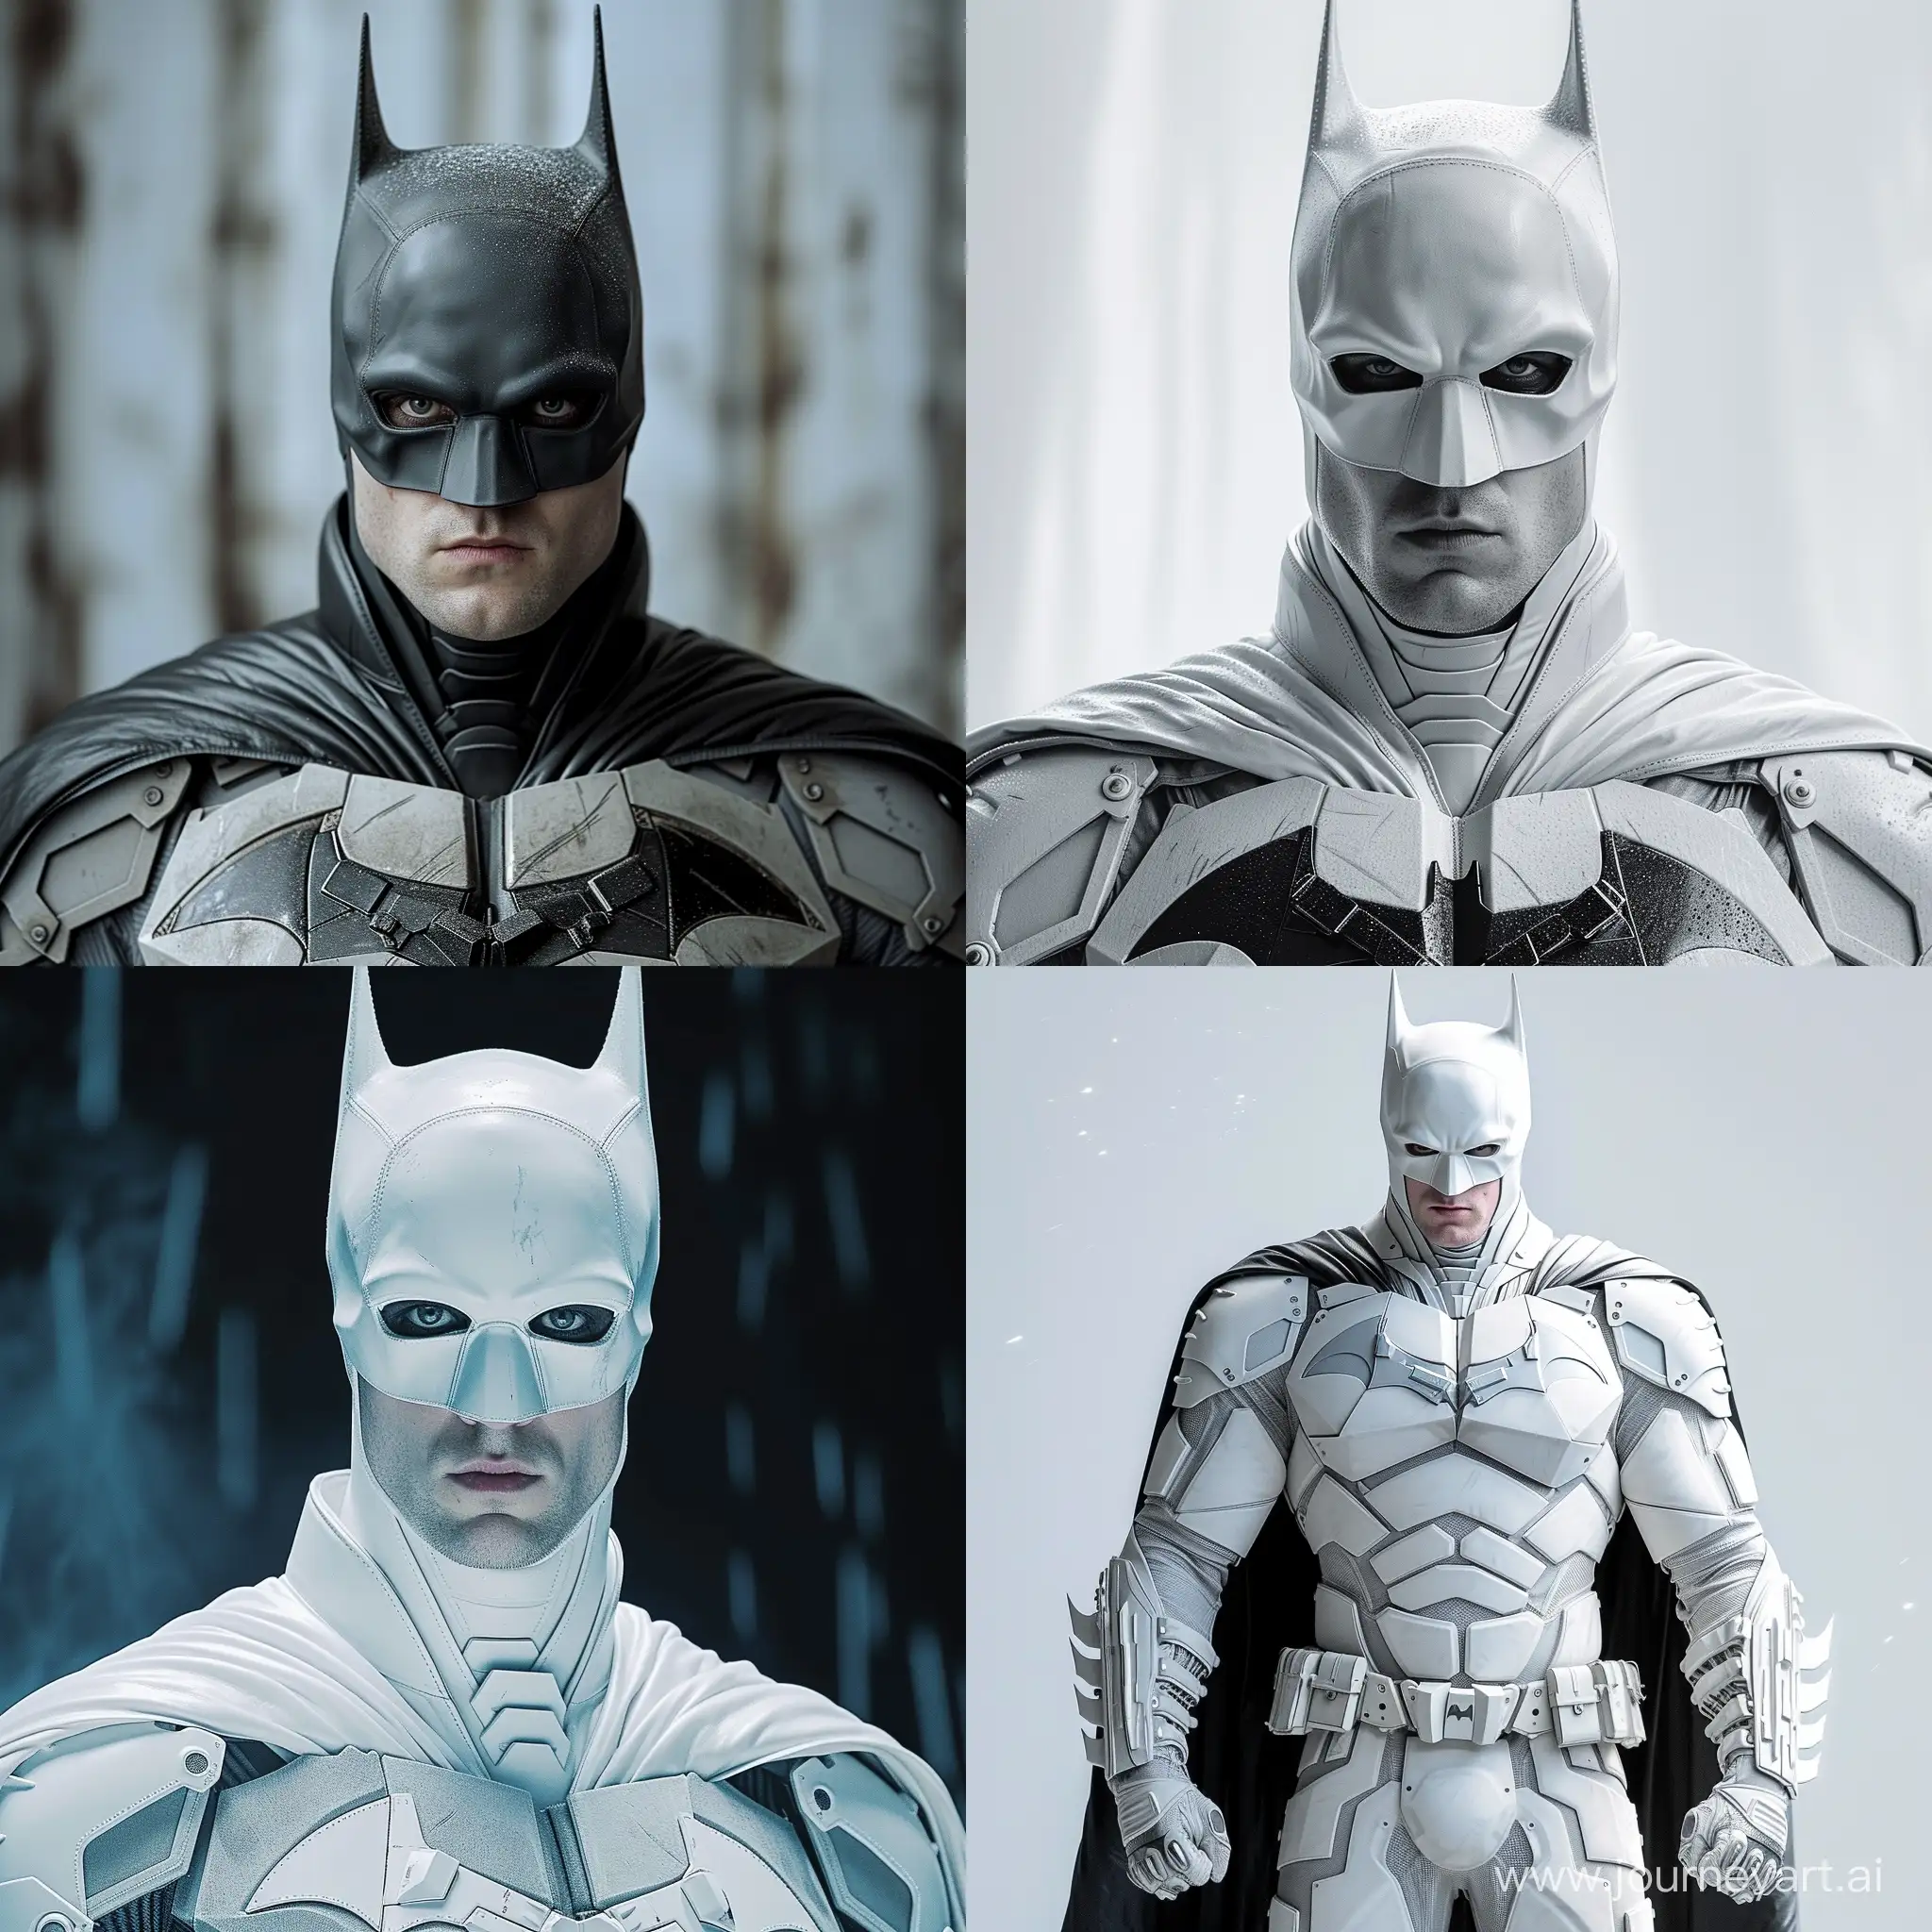 Robert-Pattinson-Portrays-Batman-in-Striking-White-Costume